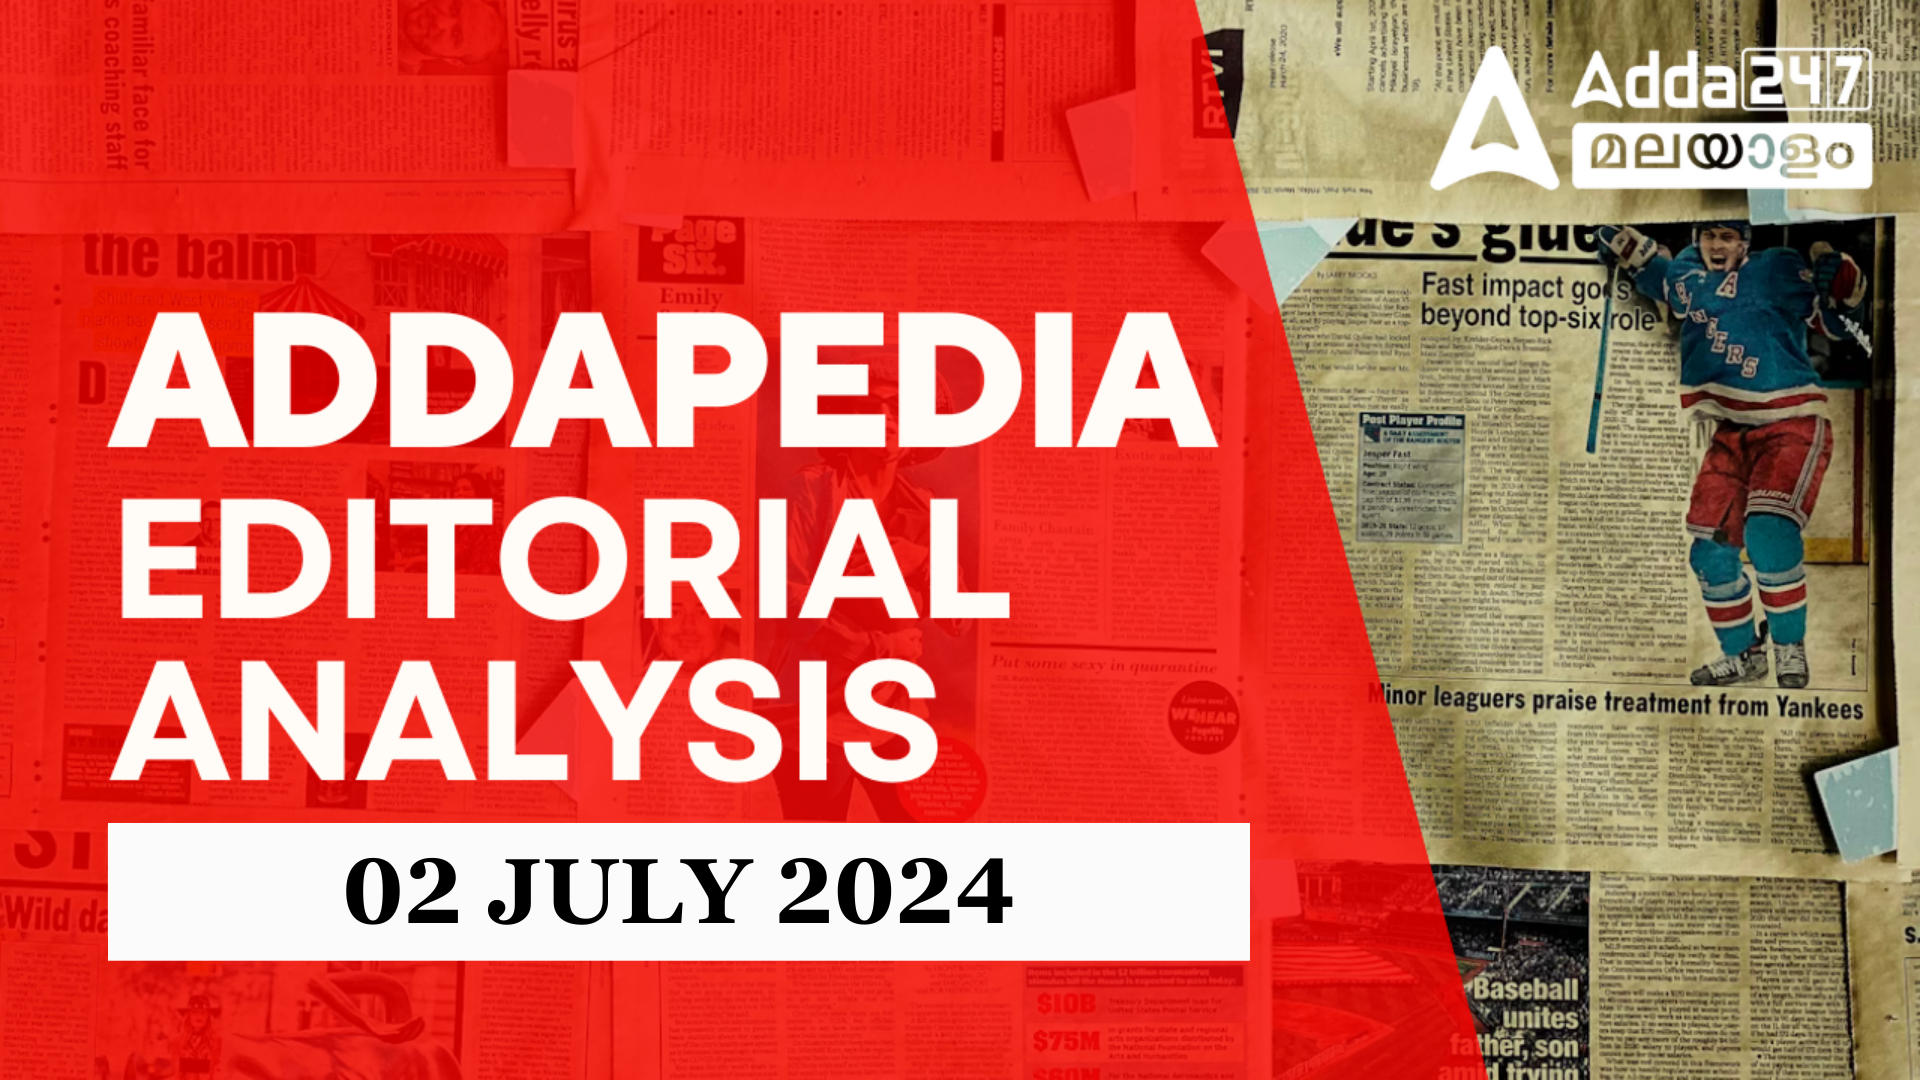 Addapedia Editorial Analysis: Daily News Editorial PDF, 02 July 2024